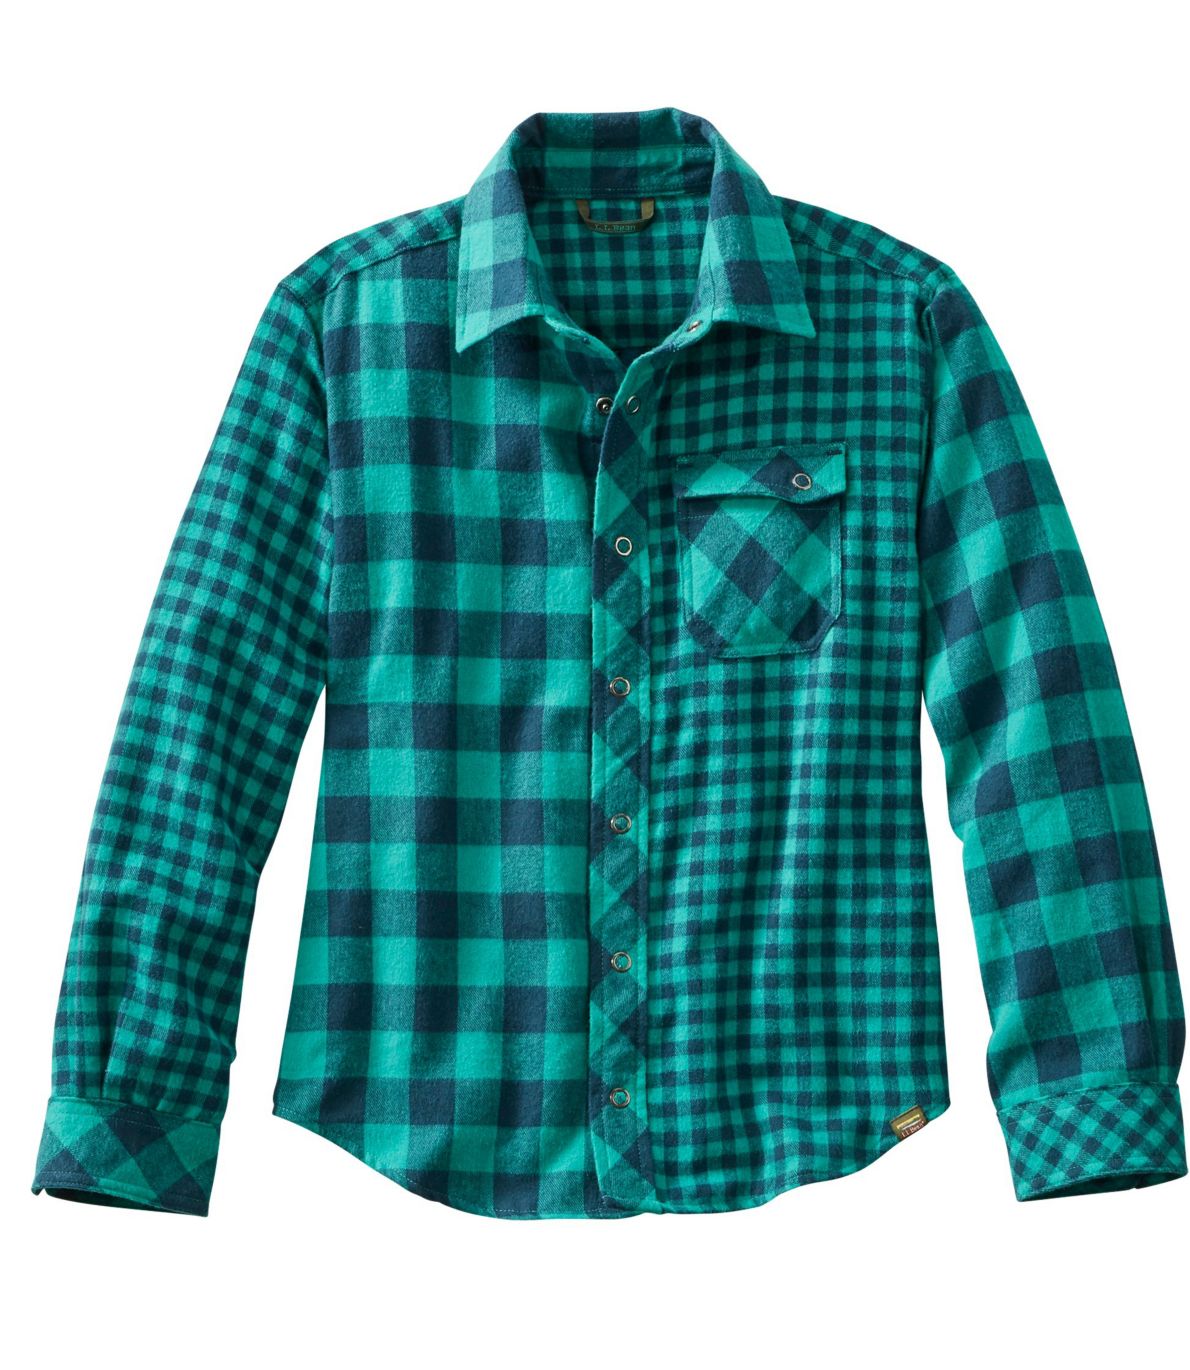 Kids' Flannel Shirt, Colorblock